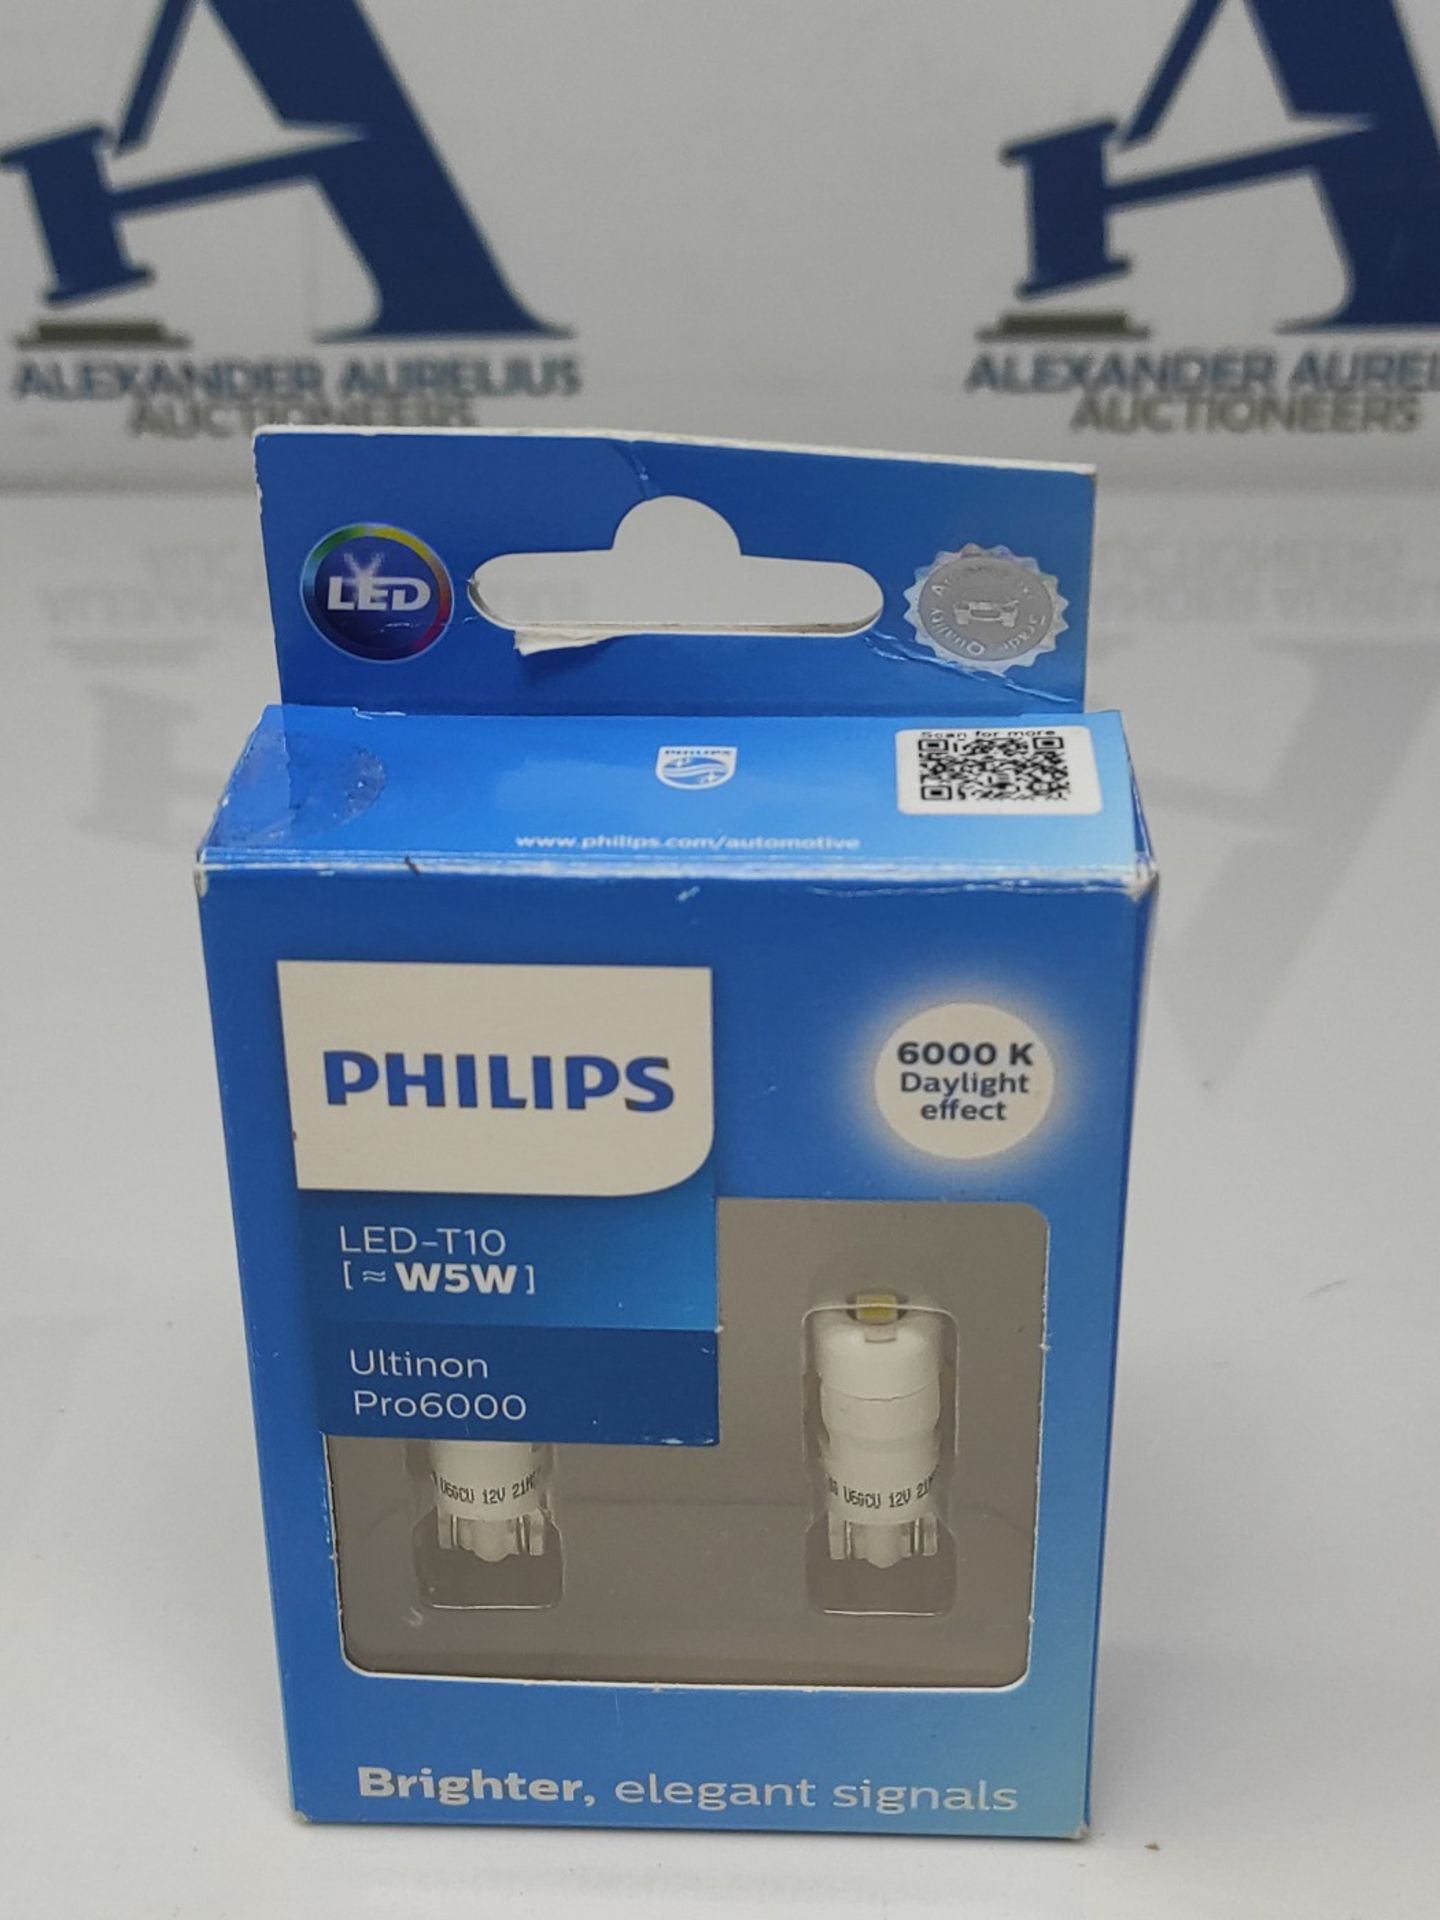 Philips Ultinon Pro6000 LED T10 automotive signaling lamp (W5W), 6,000K cool white - Image 2 of 3